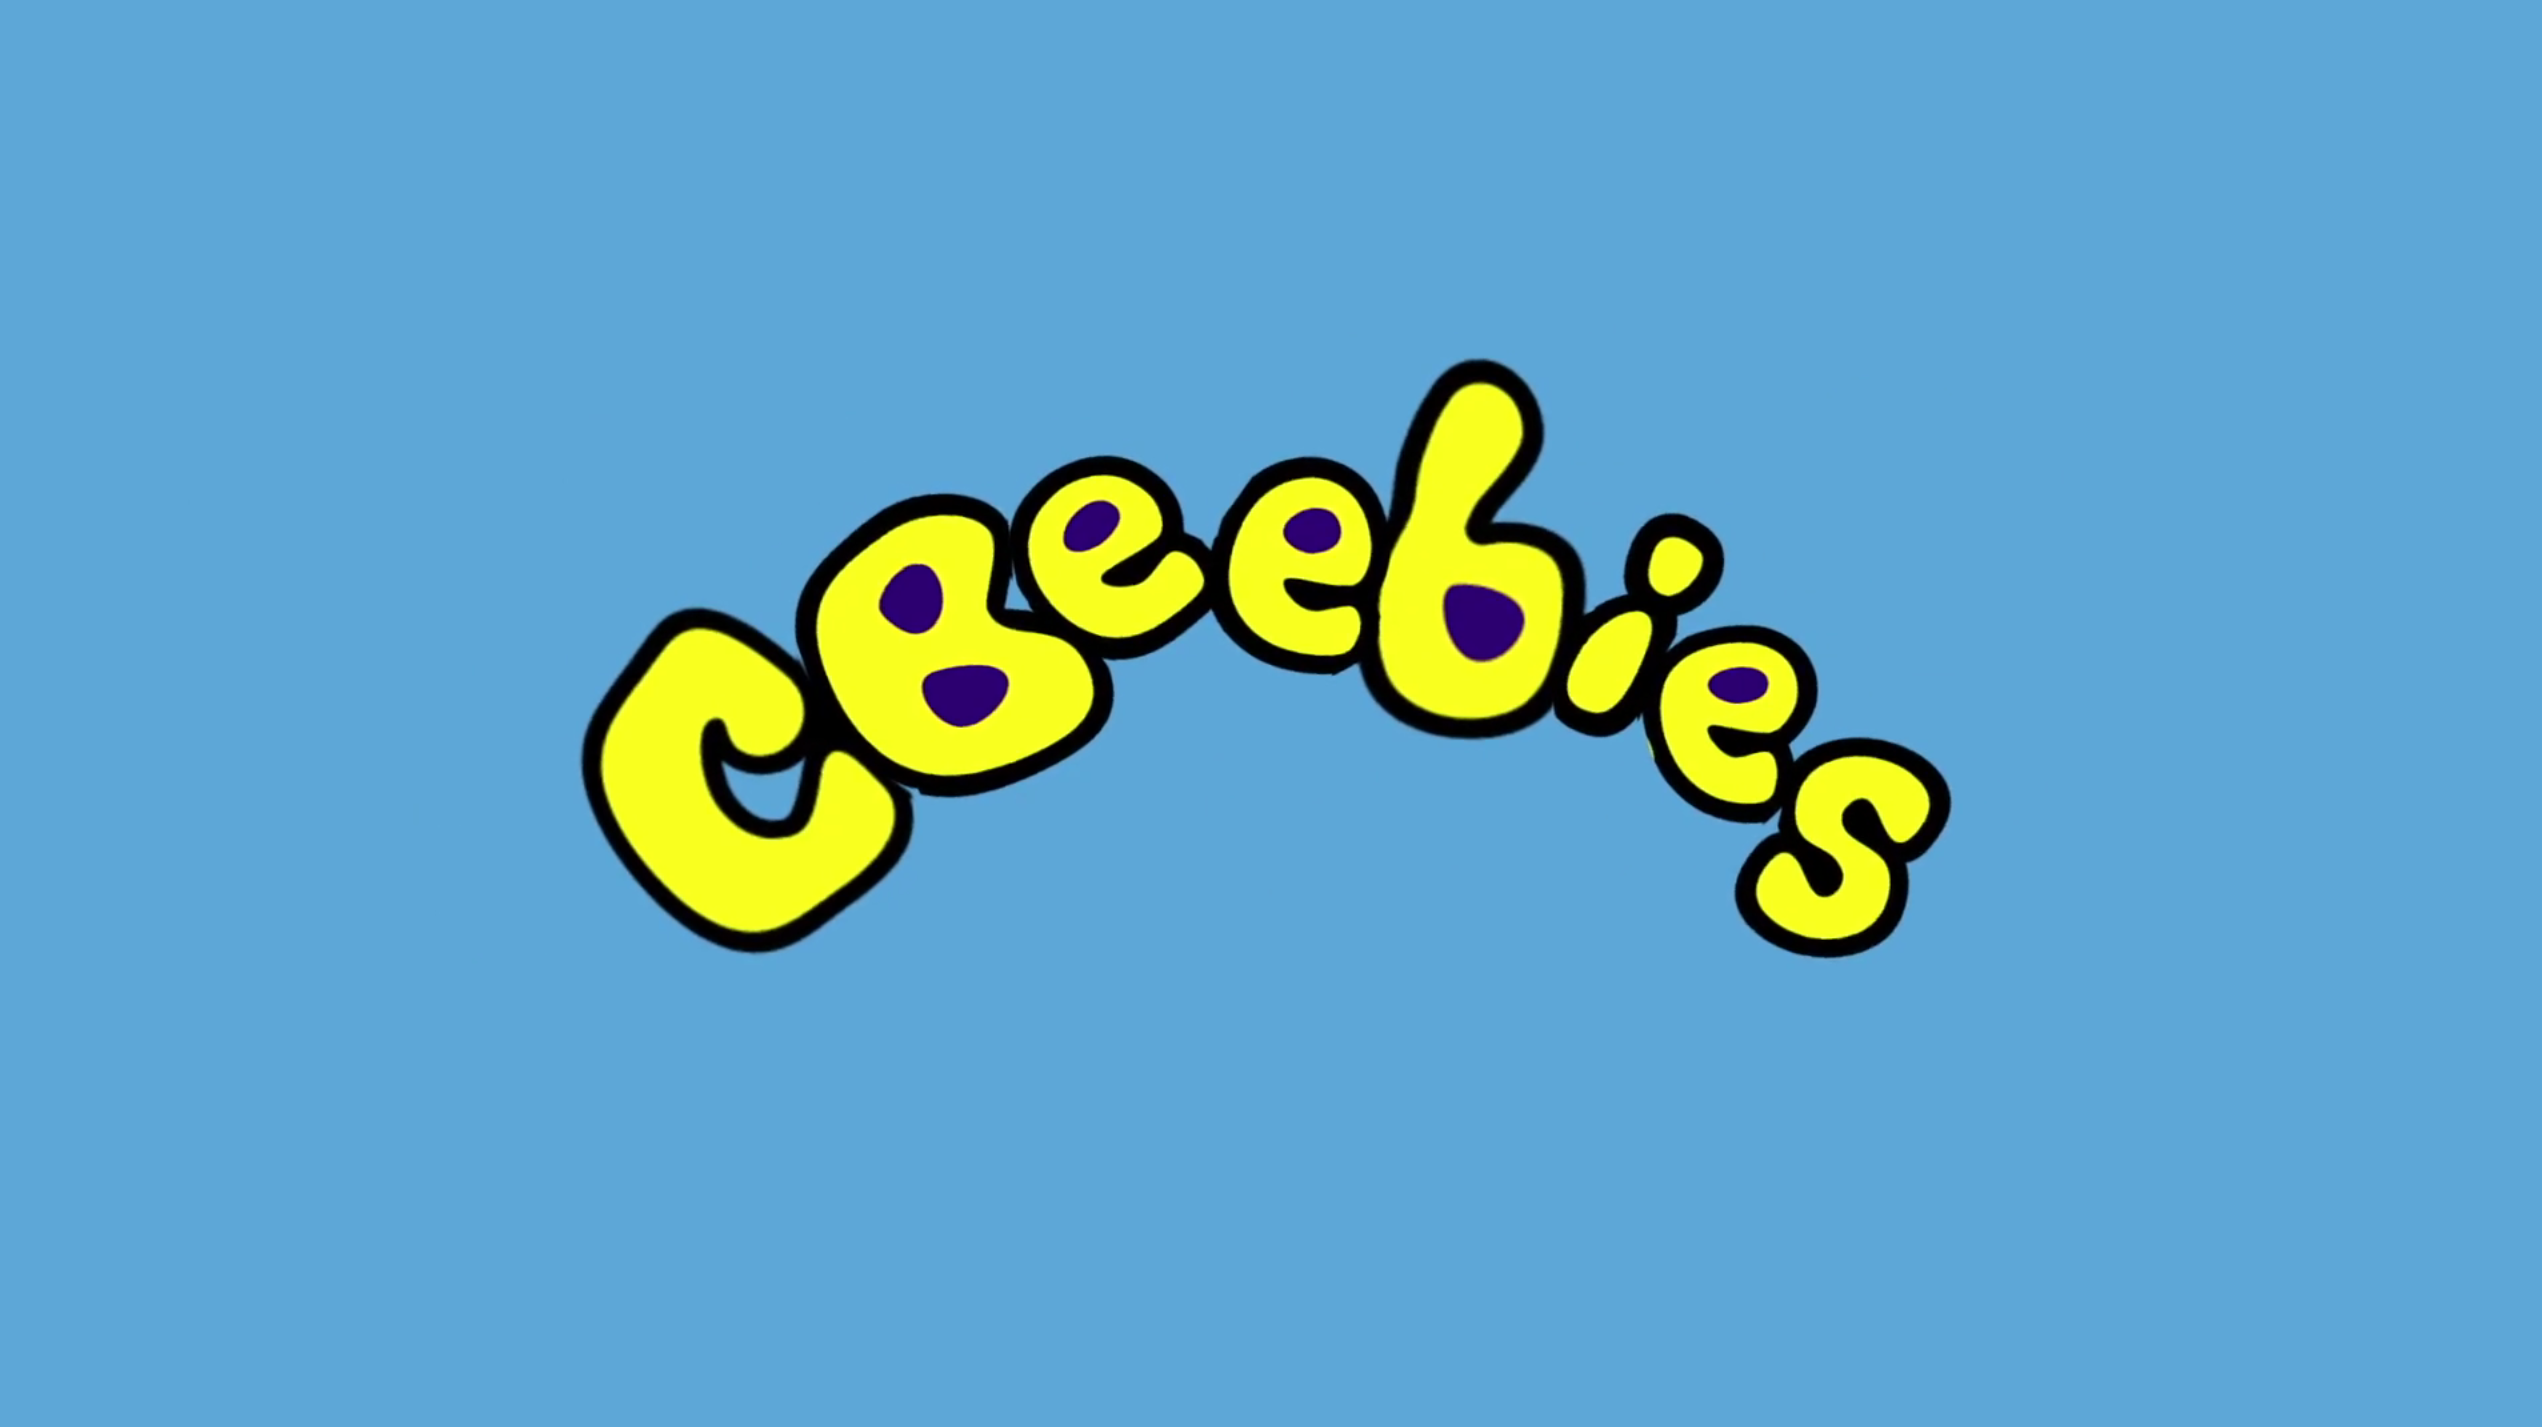 cbeebies logo on blue